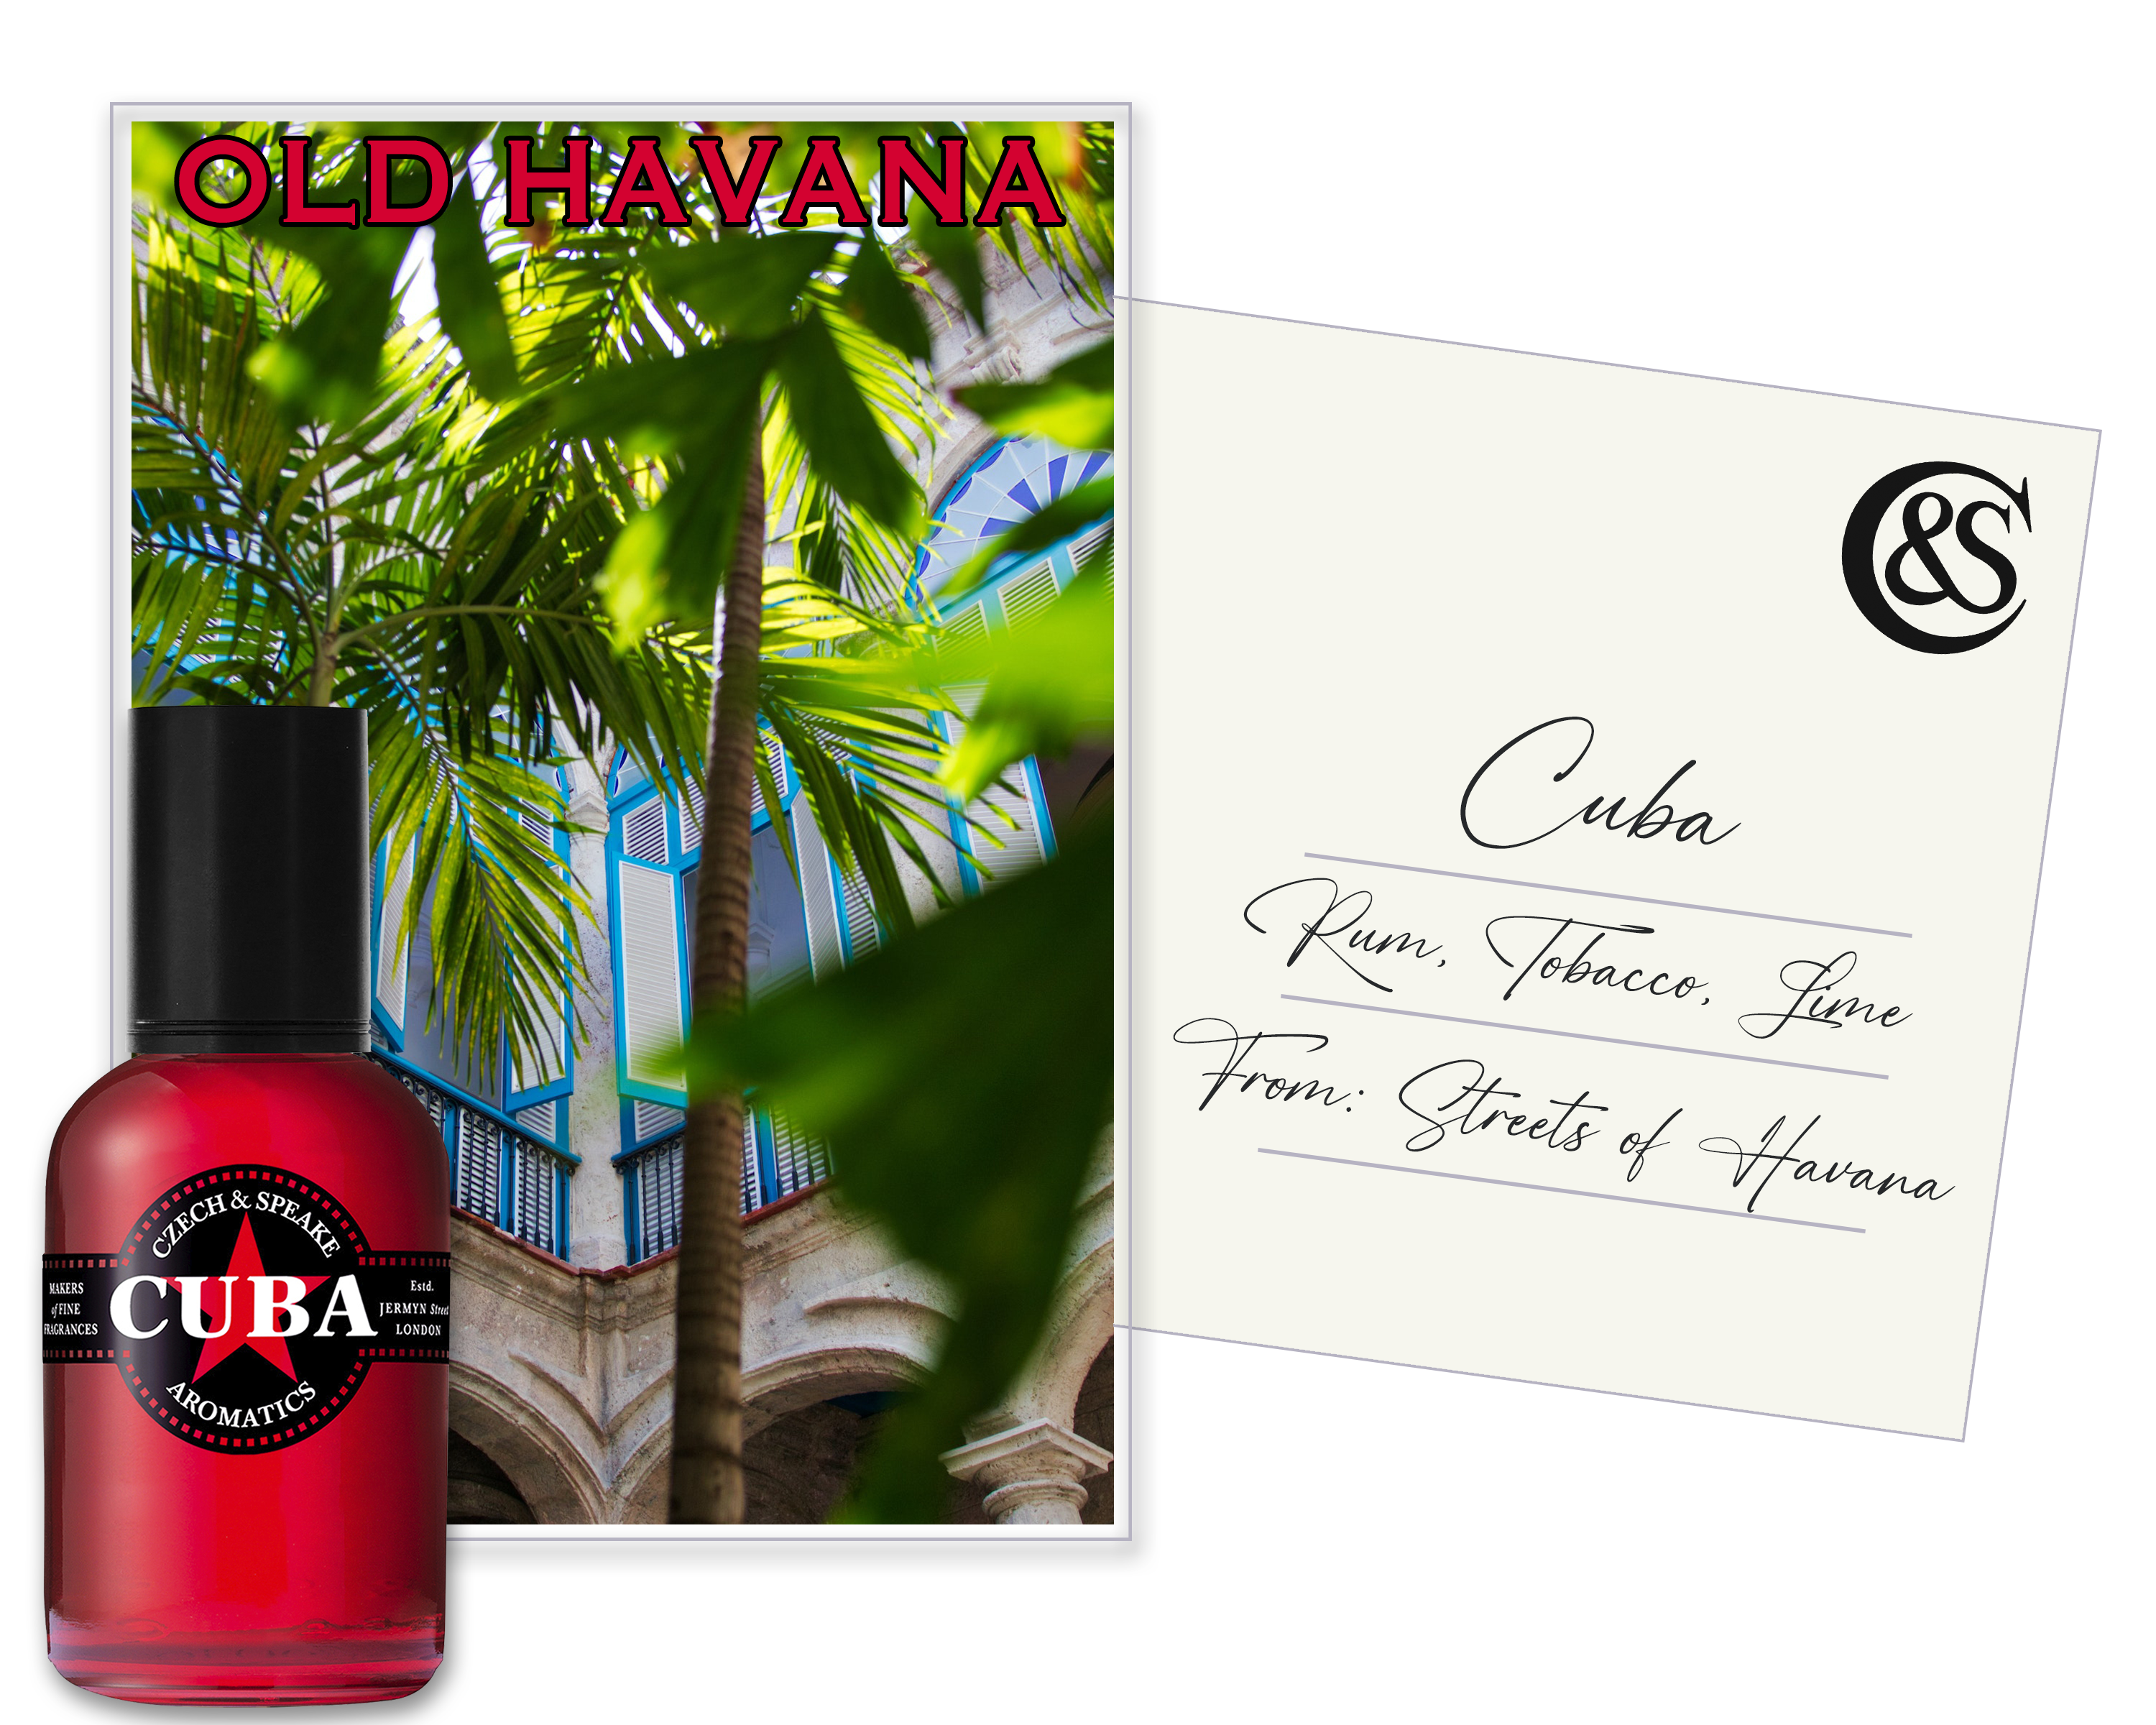 Cuba 50ml Eau de Parfum Spray, overlaid on Havana, Cuba postcard, with Cuba, fragrance notes and destination on reverse.